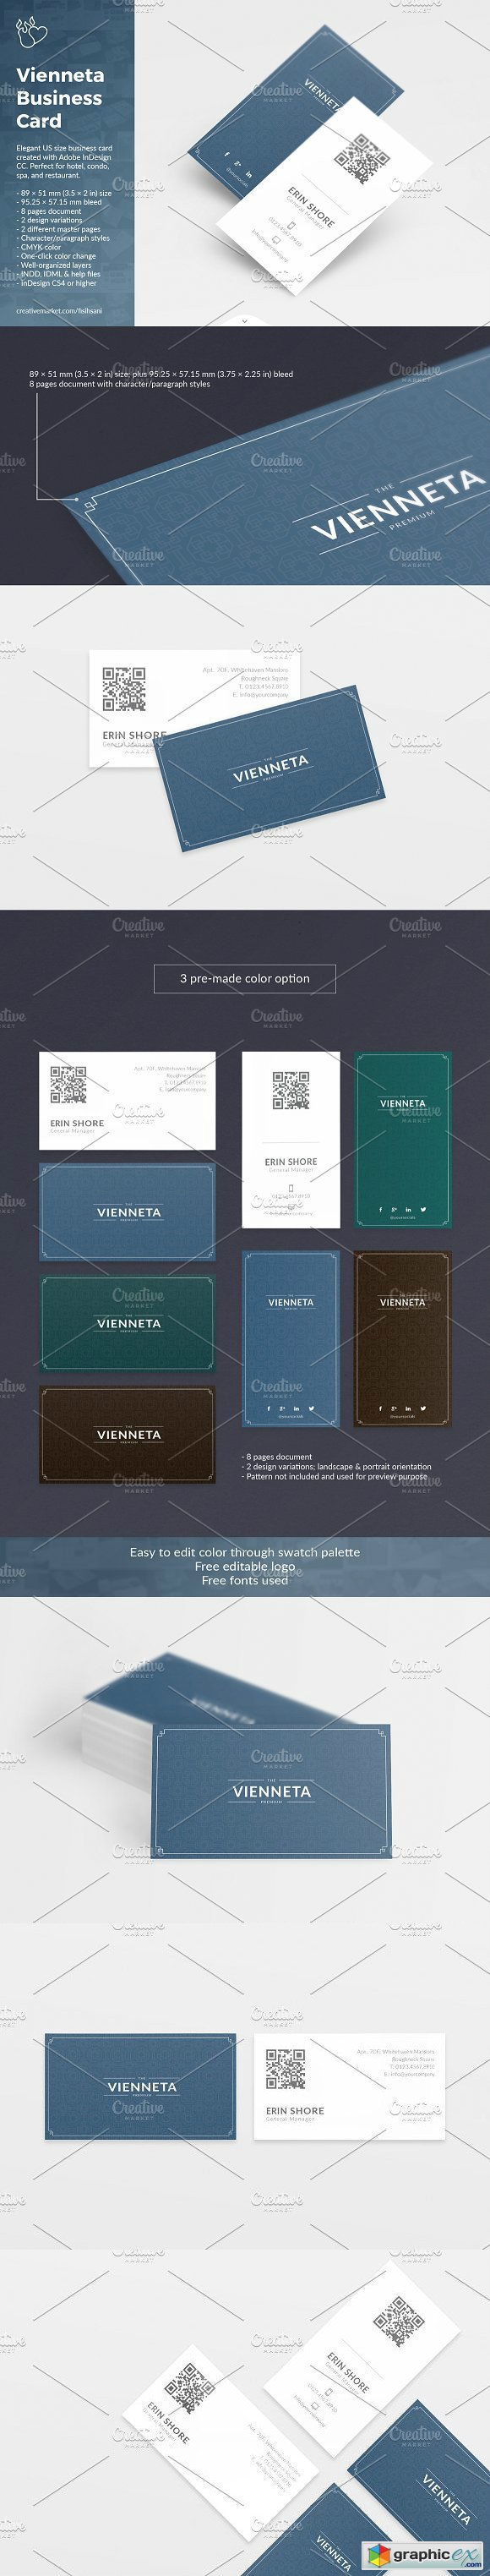 Vienneta Business Card